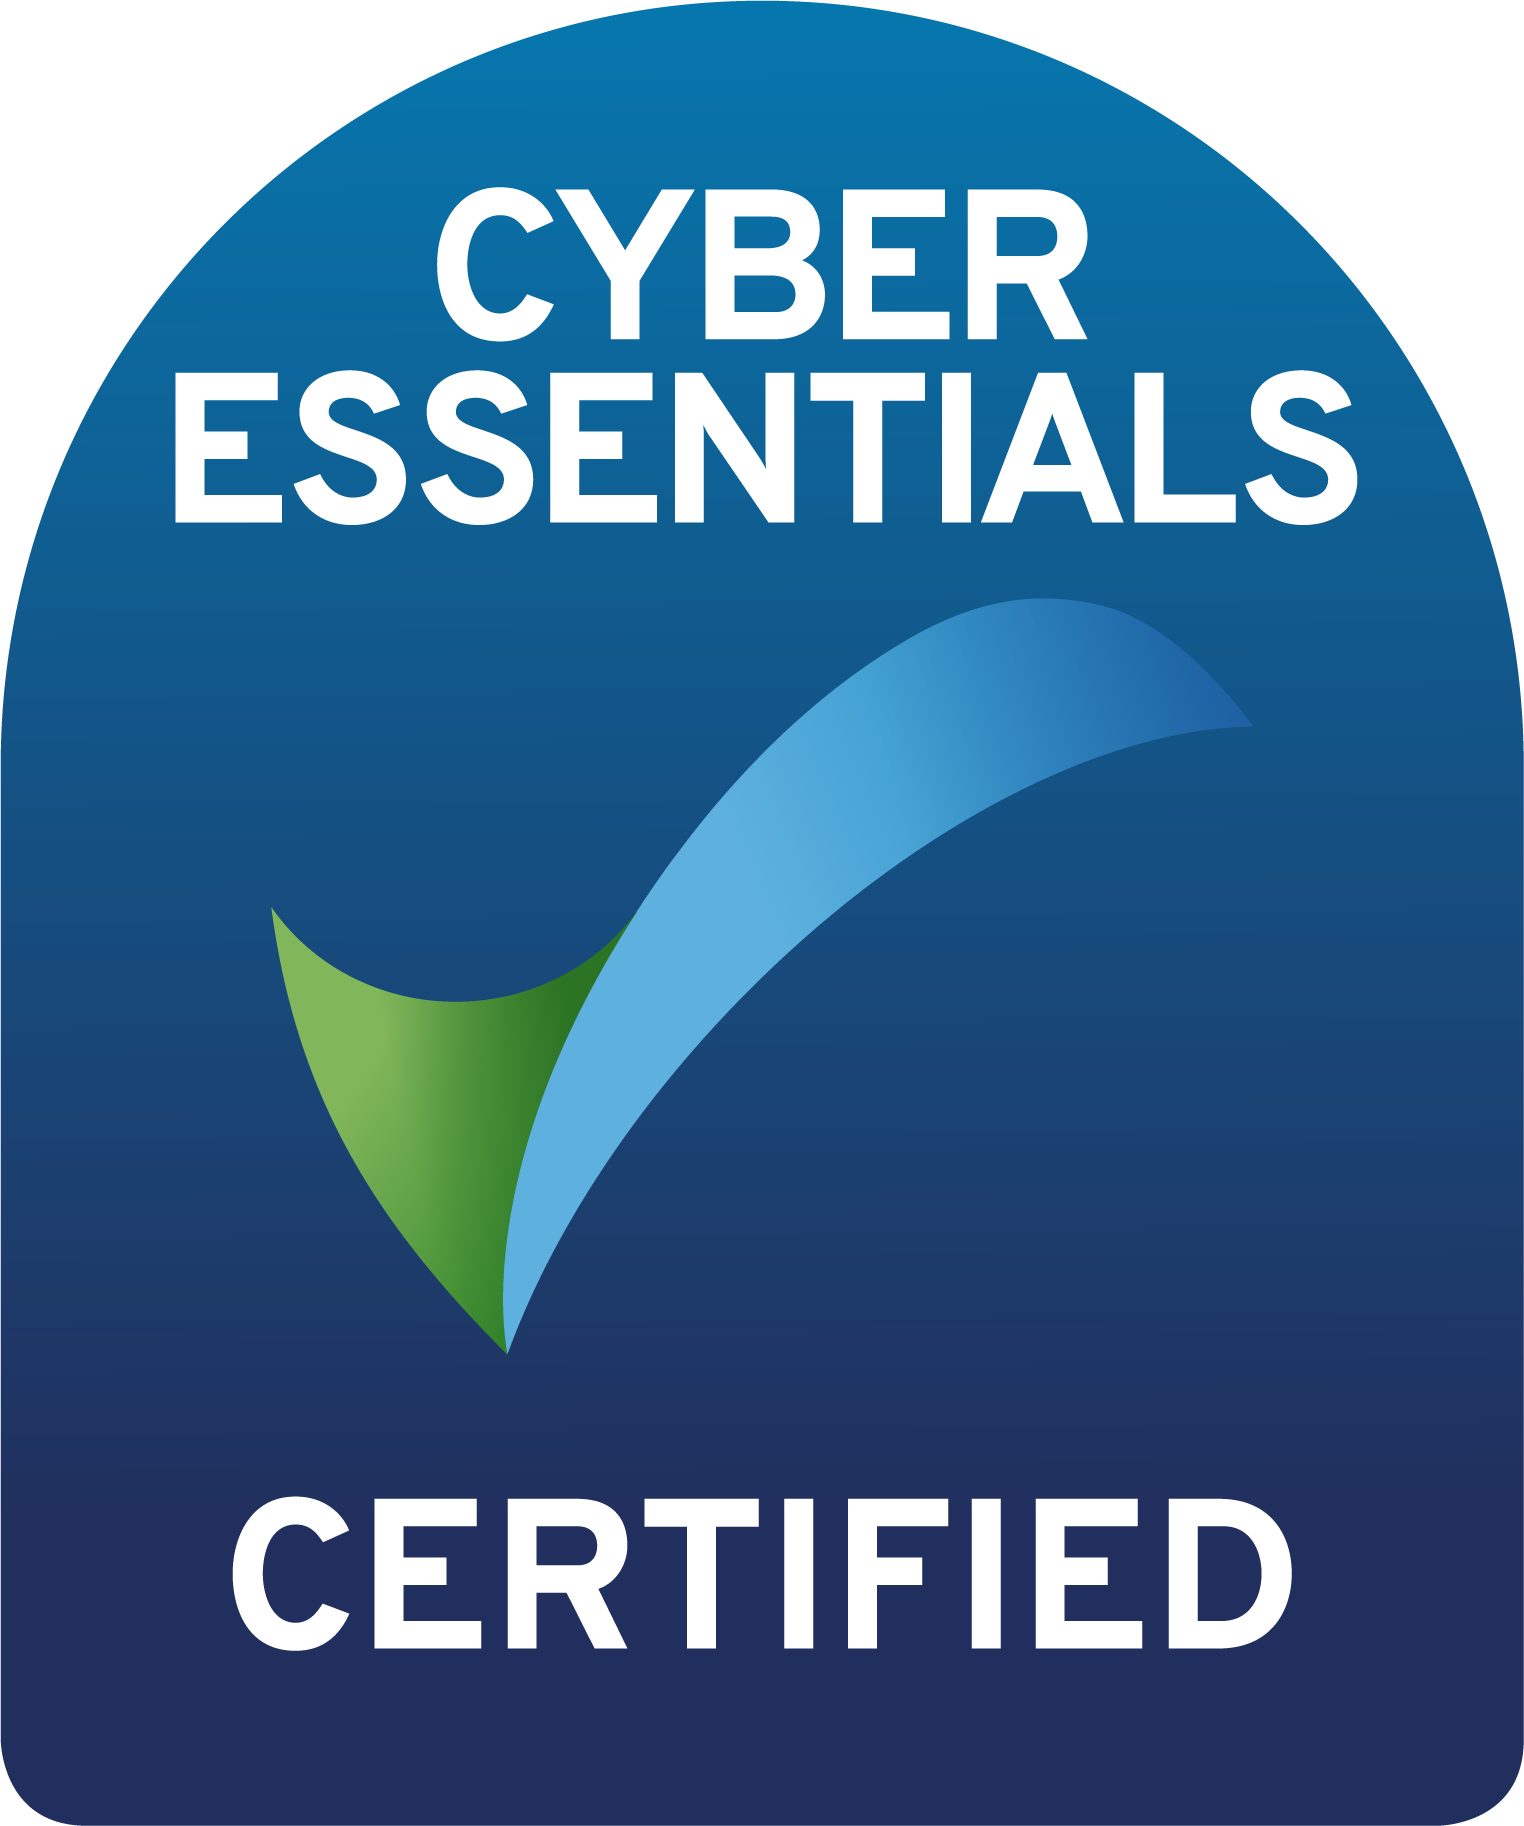 Prystine Web Solutions Ltd is Cyber Essentials Certified